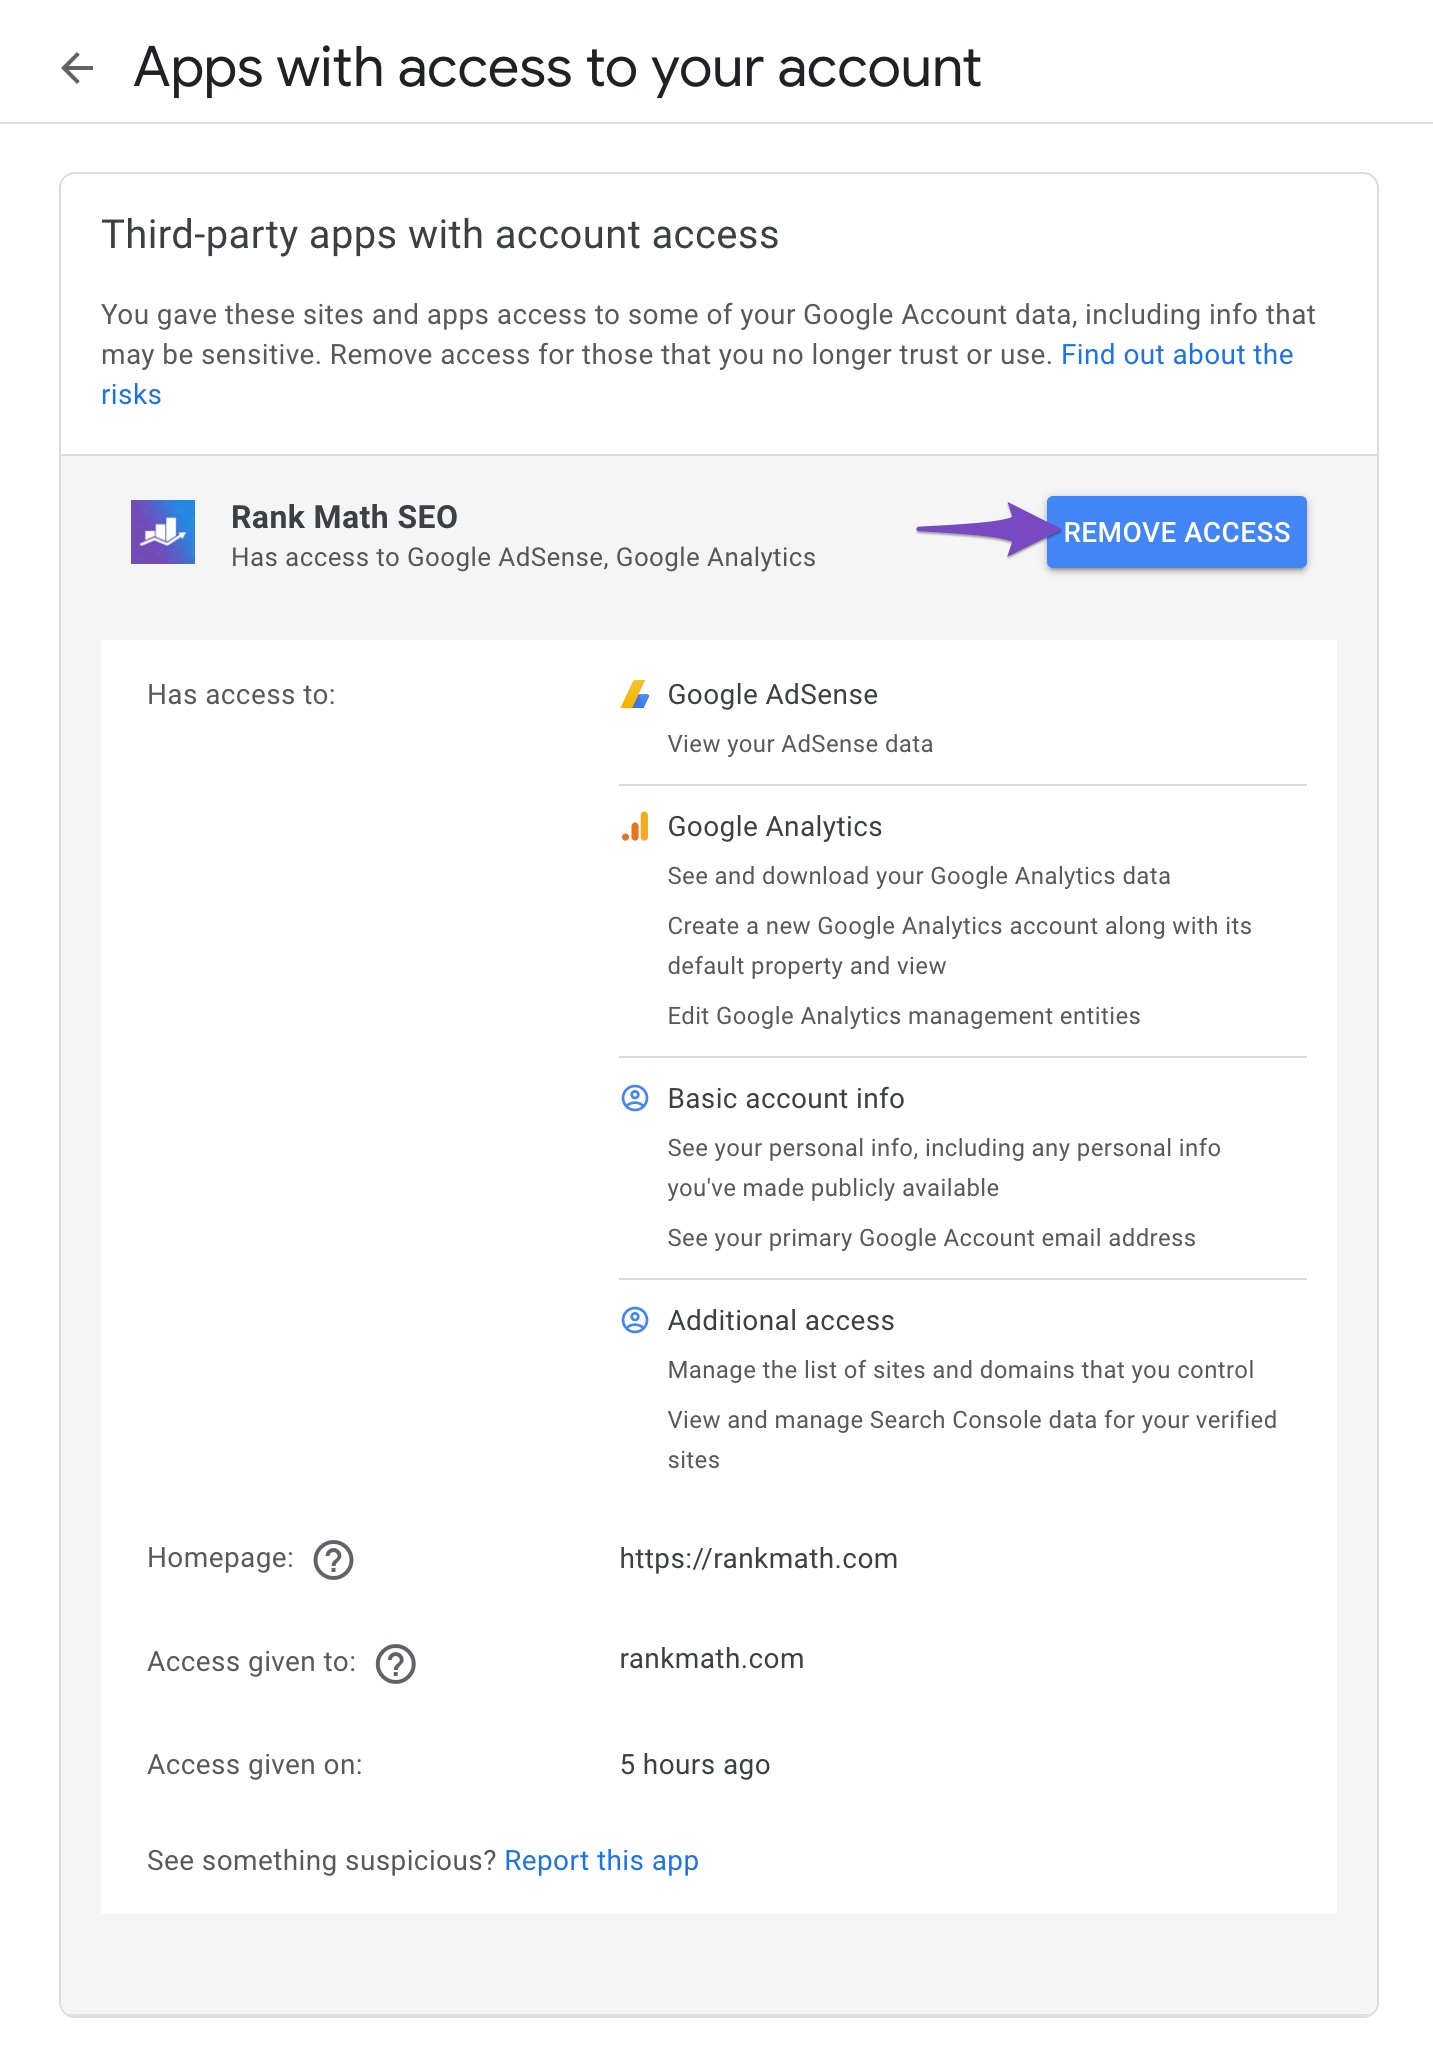 Remove Rank Math app from Google account